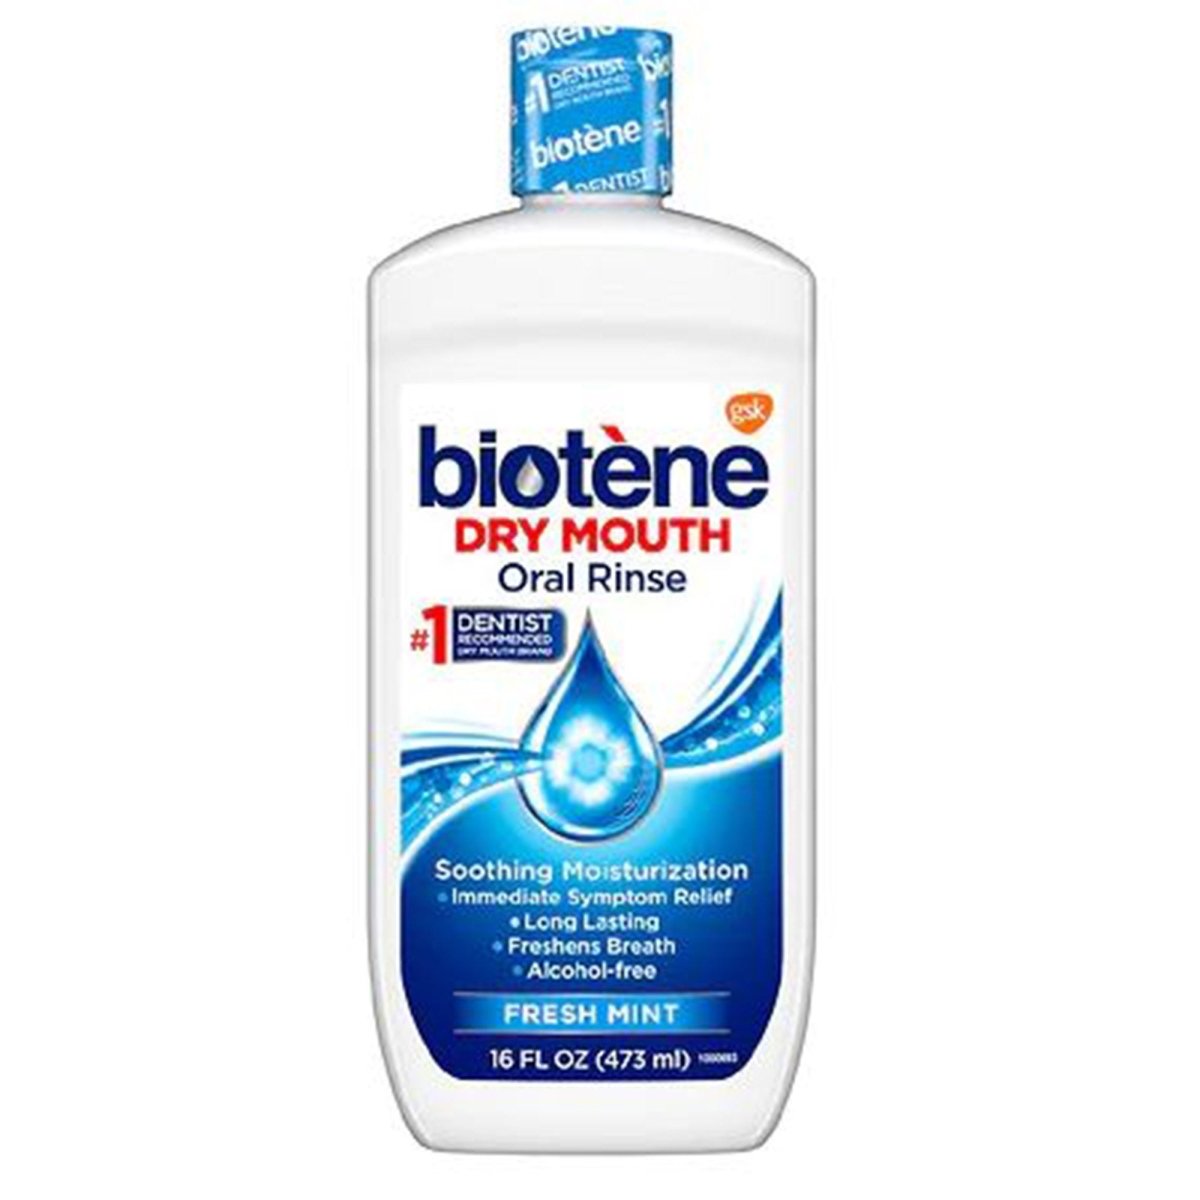 Biotene Dry Mouth Oral Rinse - 632130_EA - 1